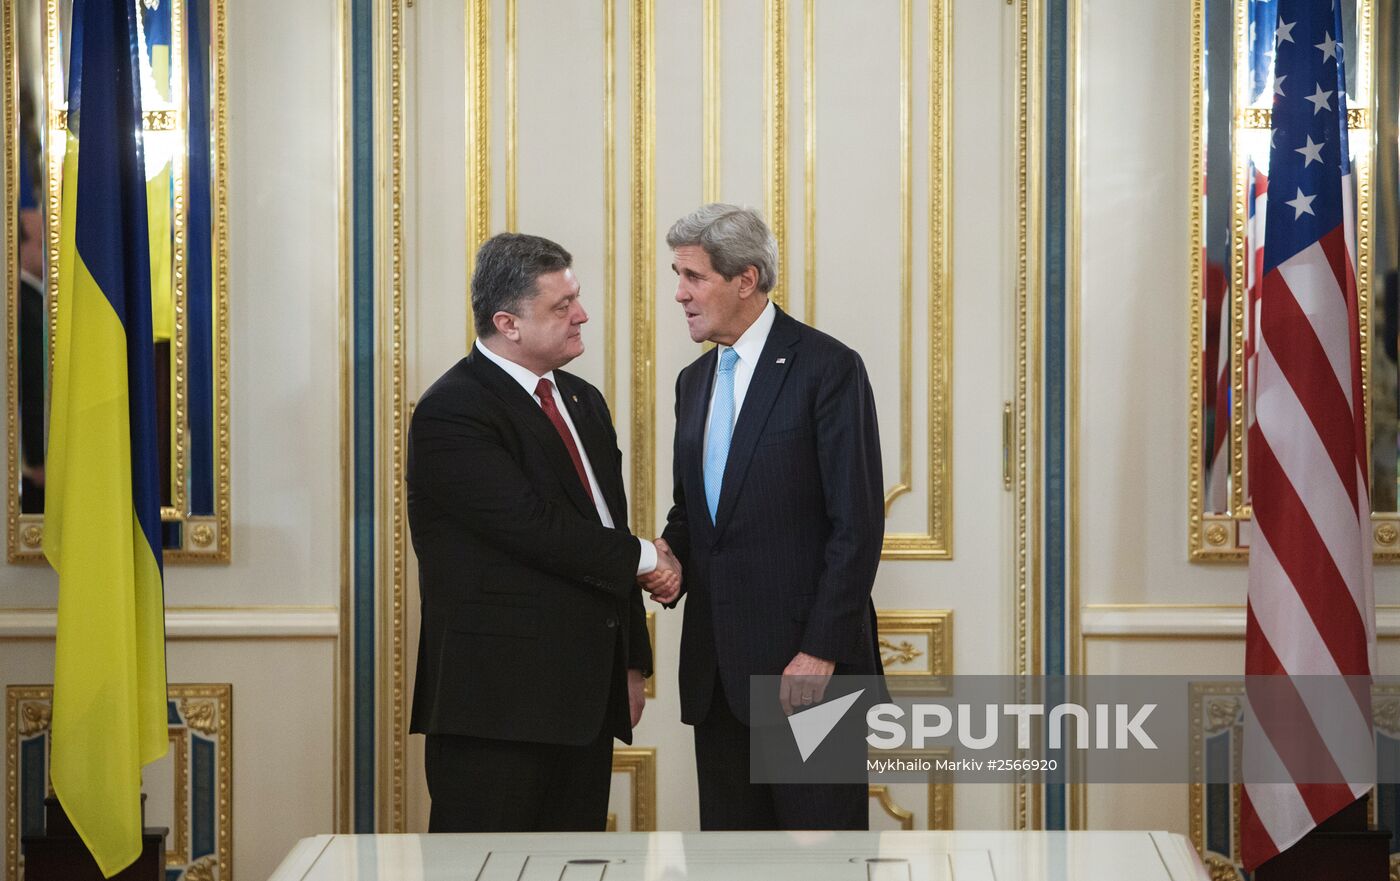 Meeting of Ukraine's President Pyotr Poroshenko and US Secretary of State John Kerry